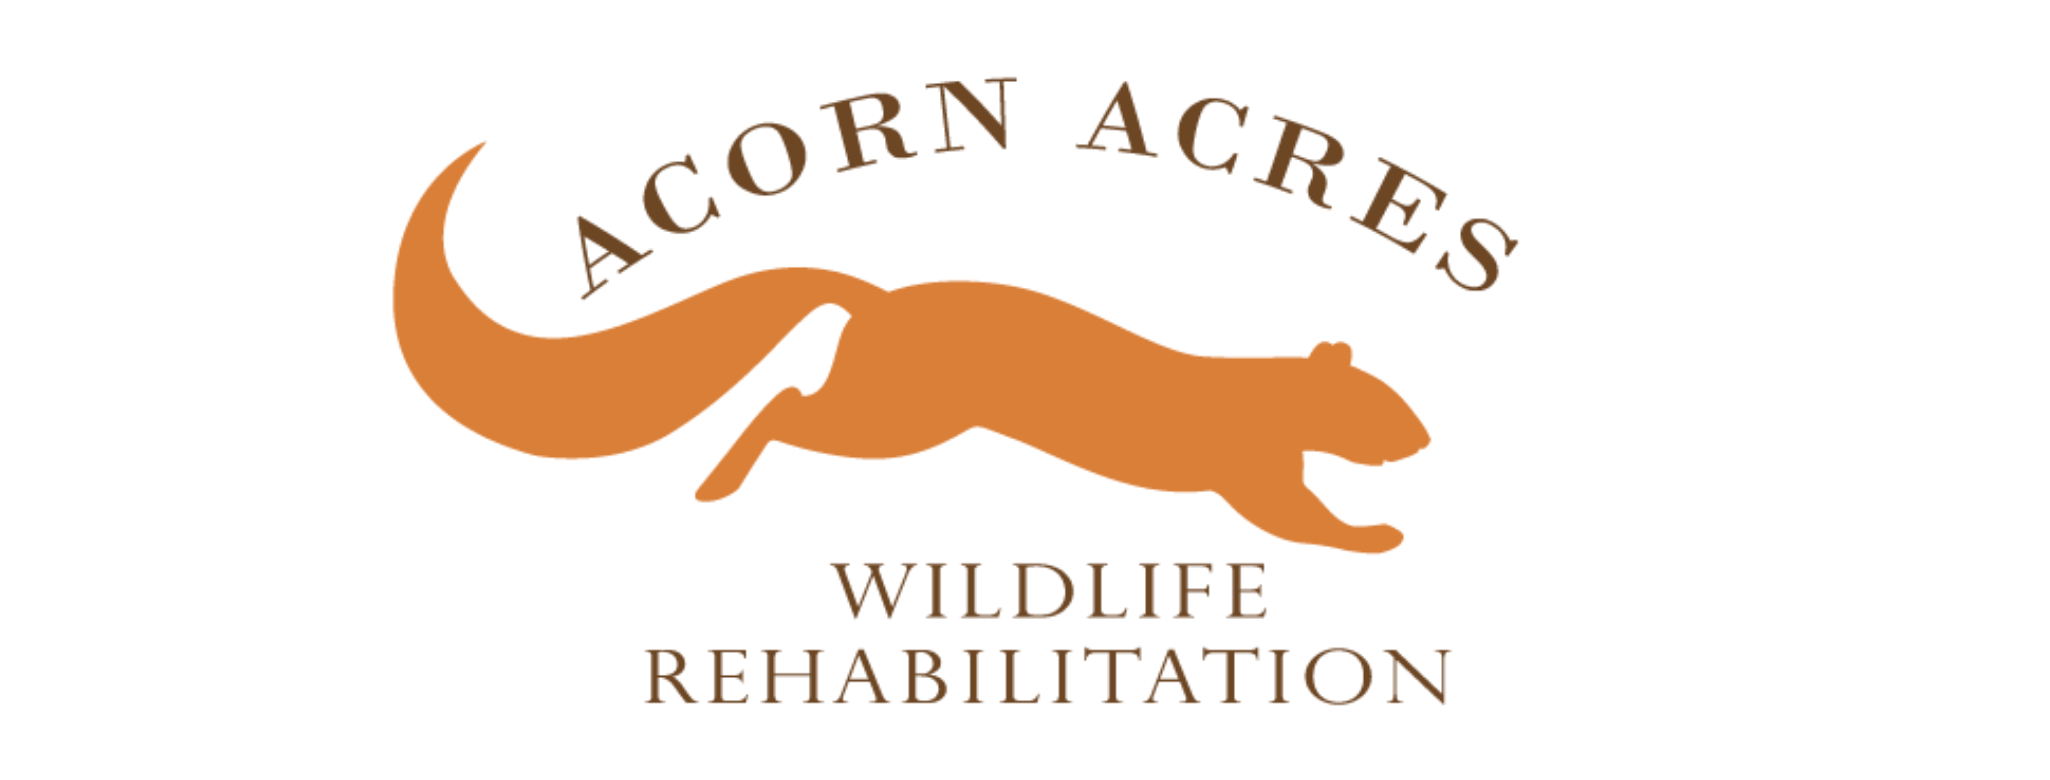 Acorn Acres Wildlife Rehabilitation Login